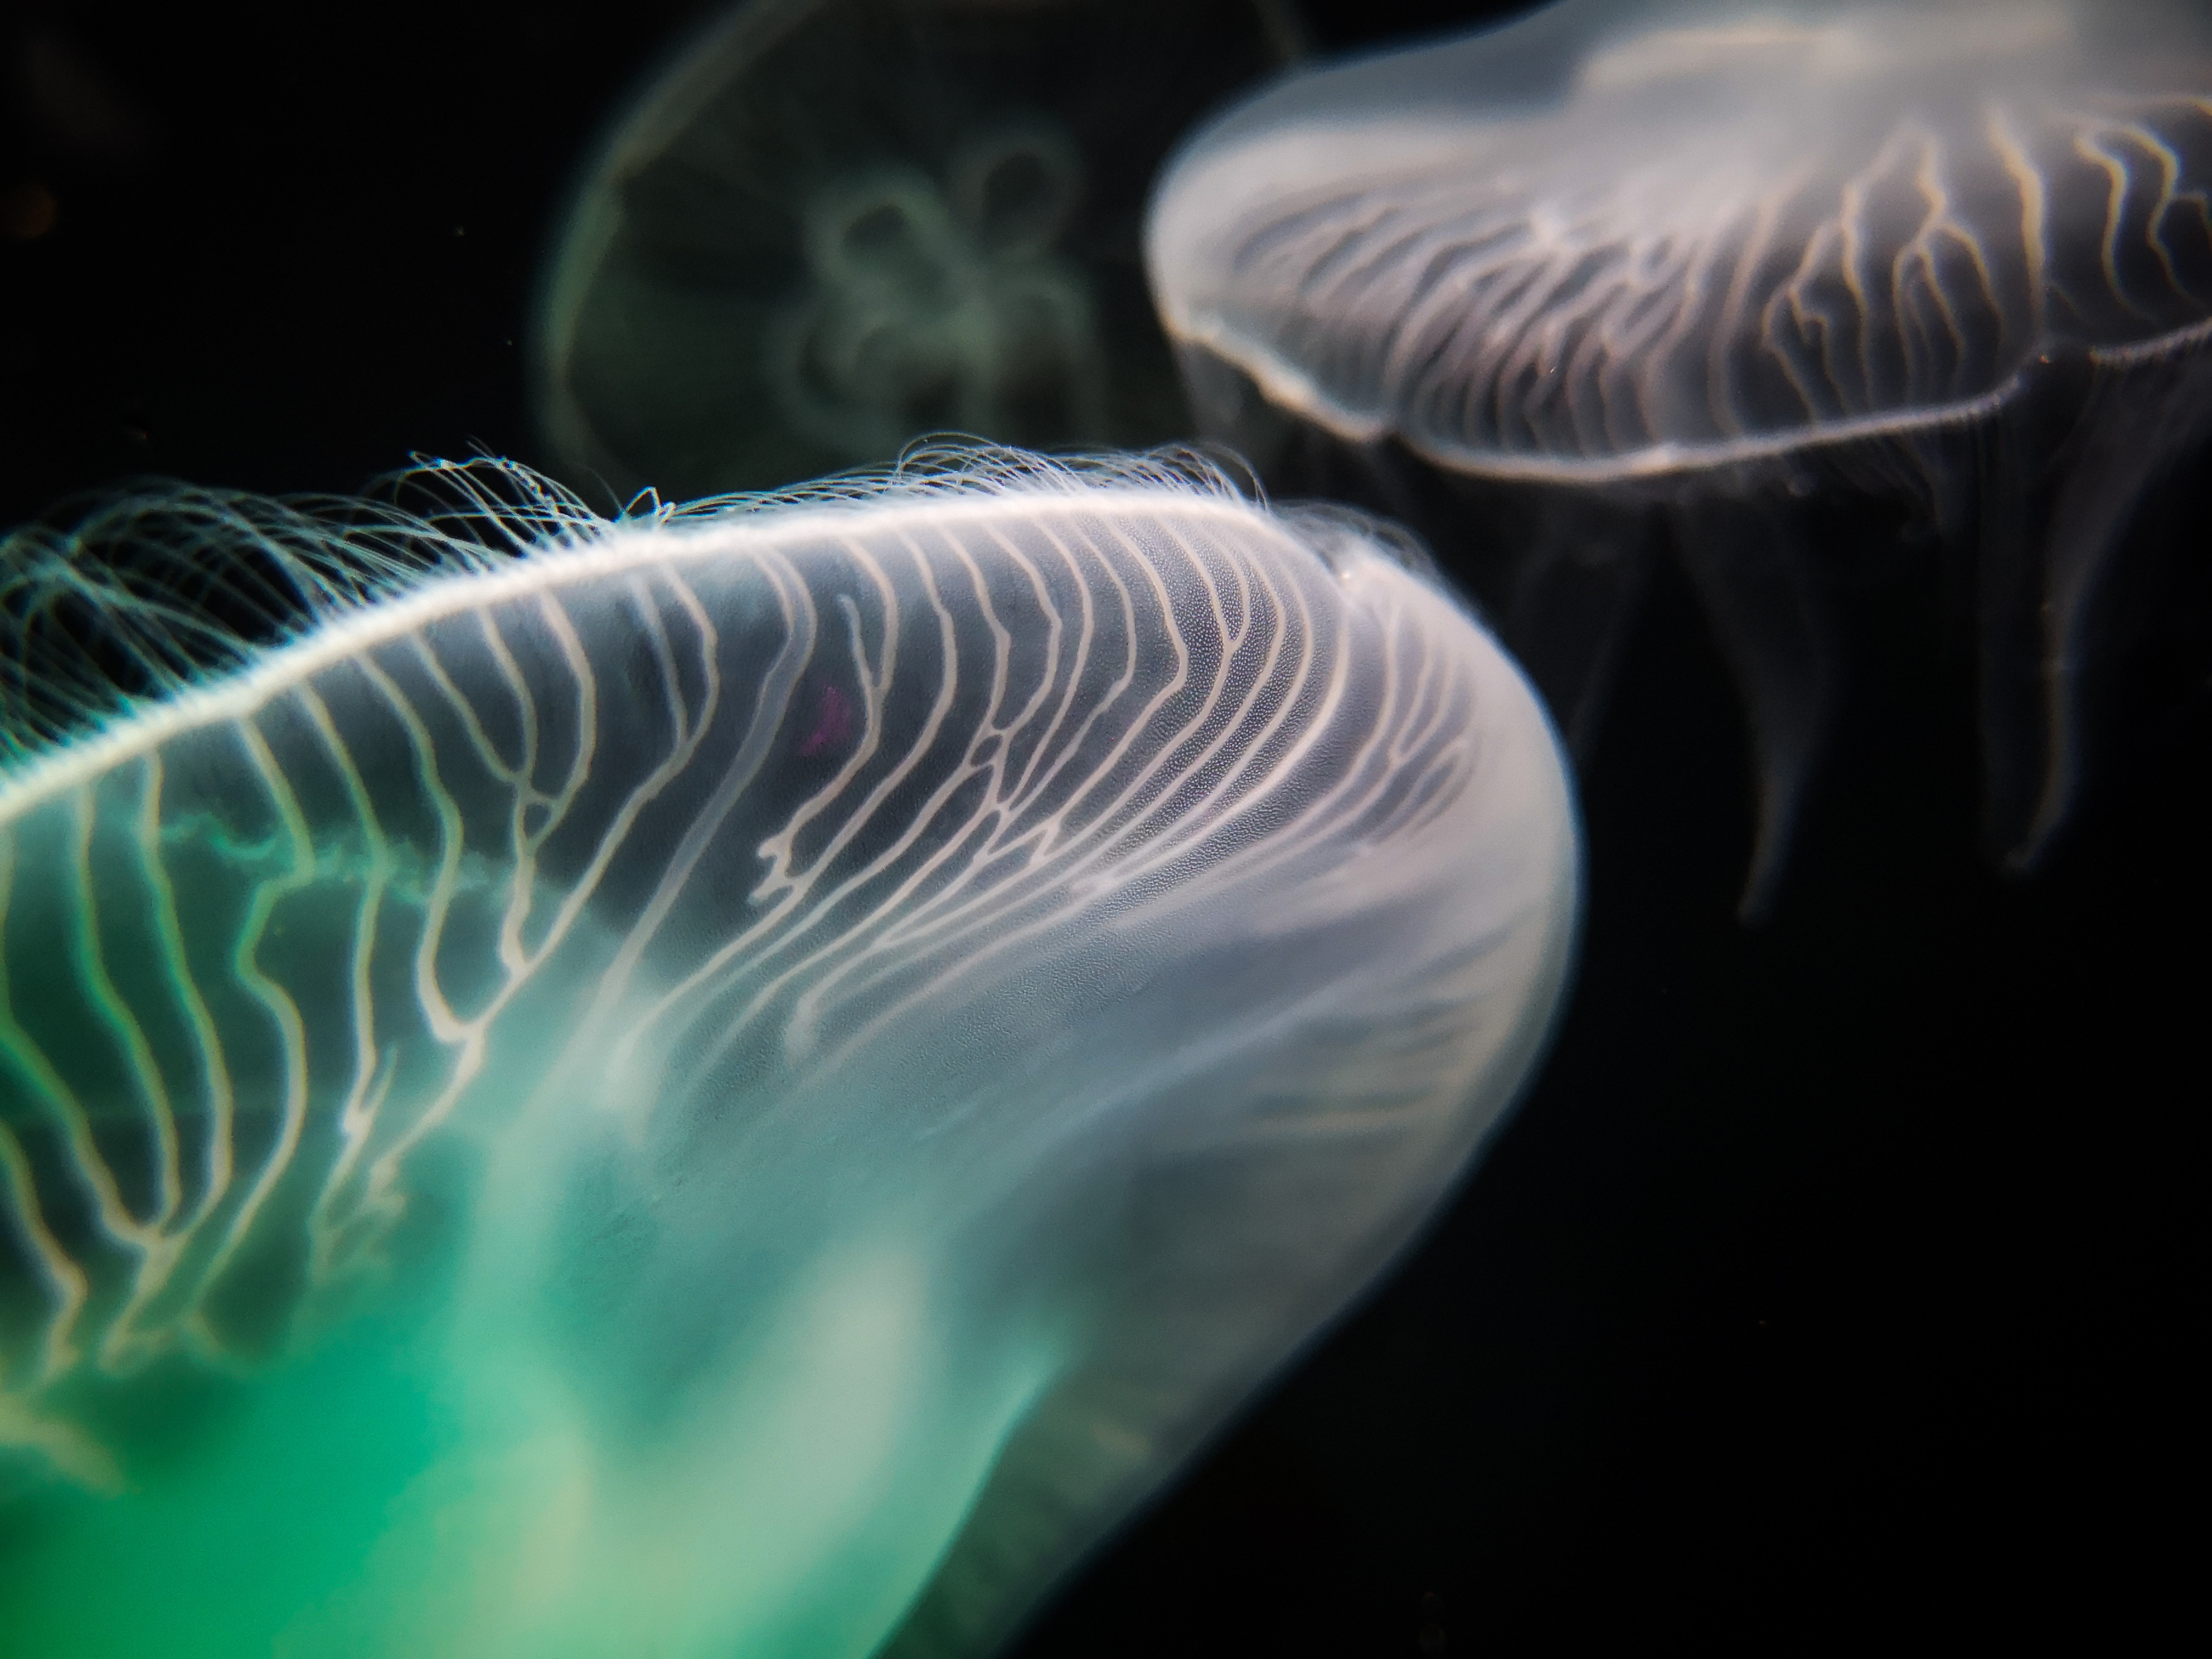 Jellyfish Fishing with Bathbomb